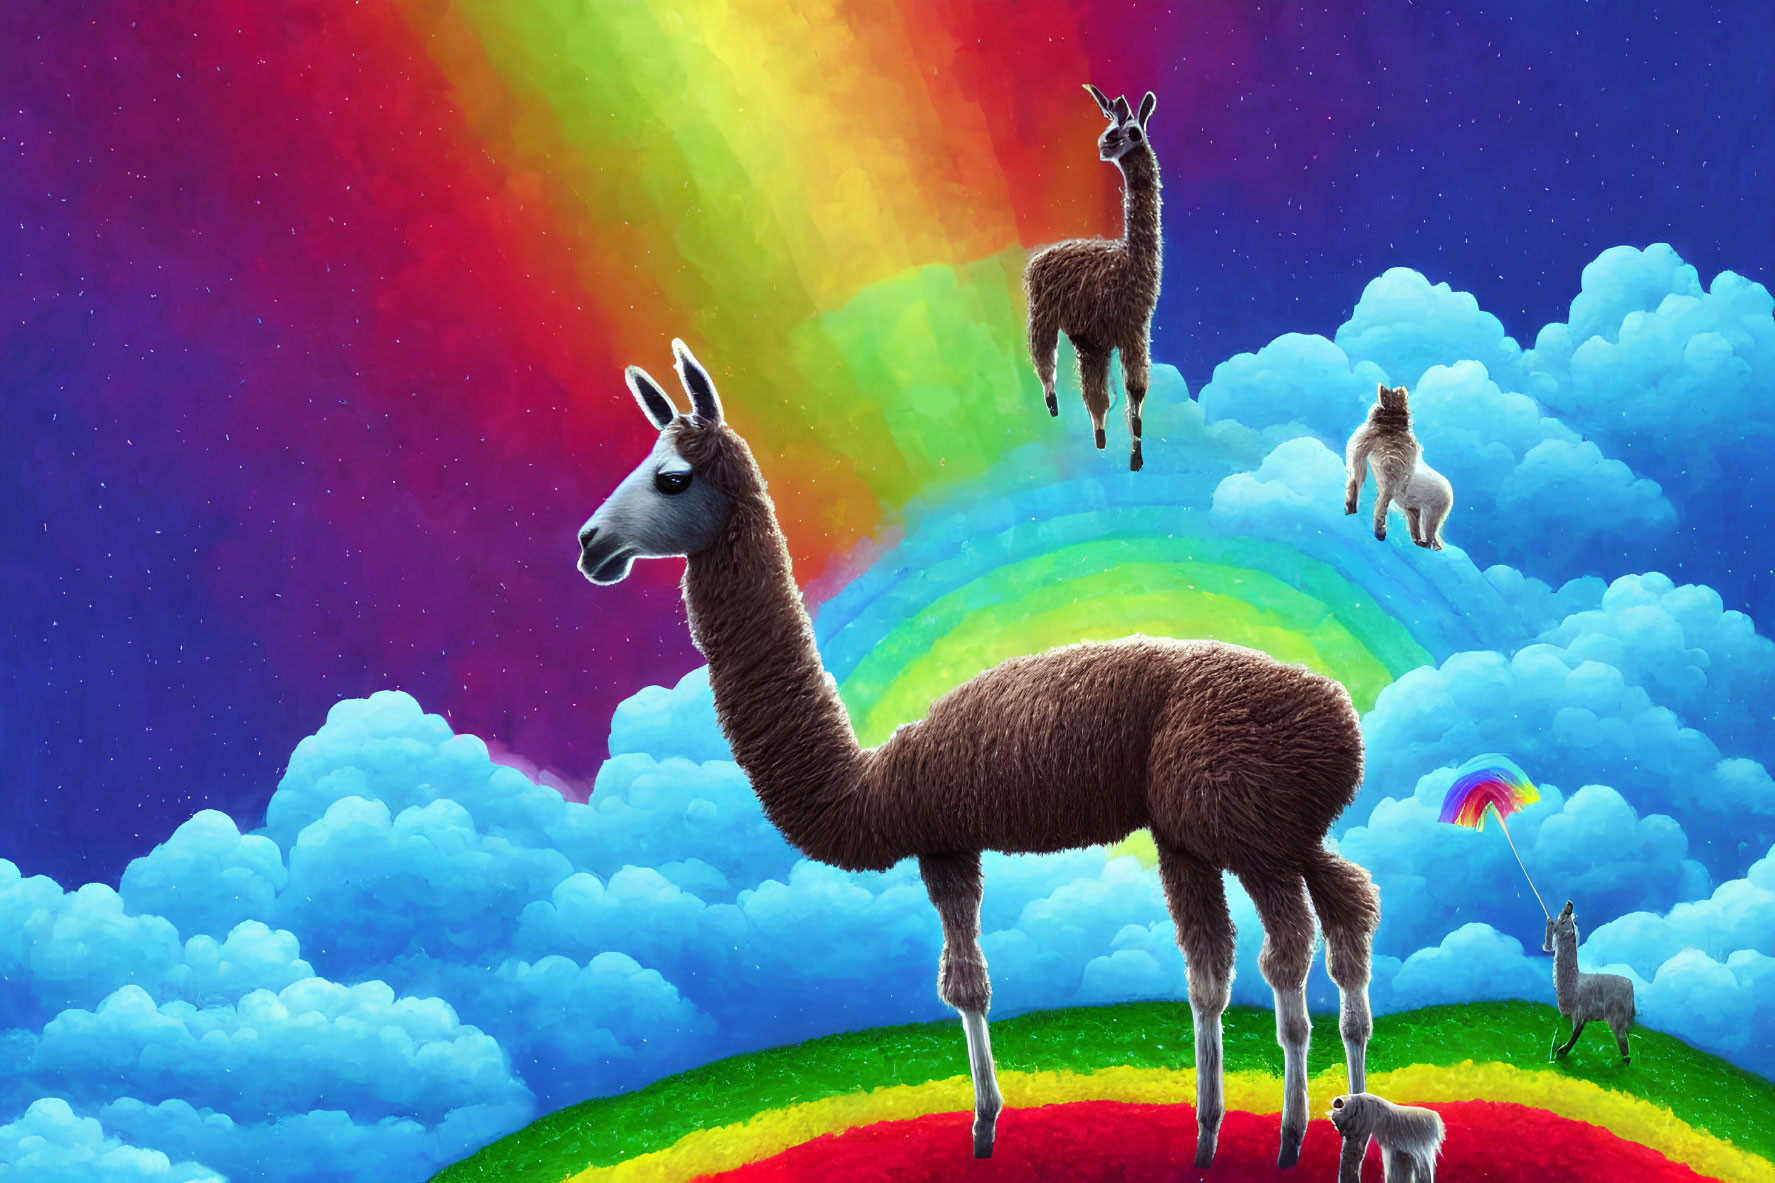 Llamas on clouds with vibrant rainbow hues